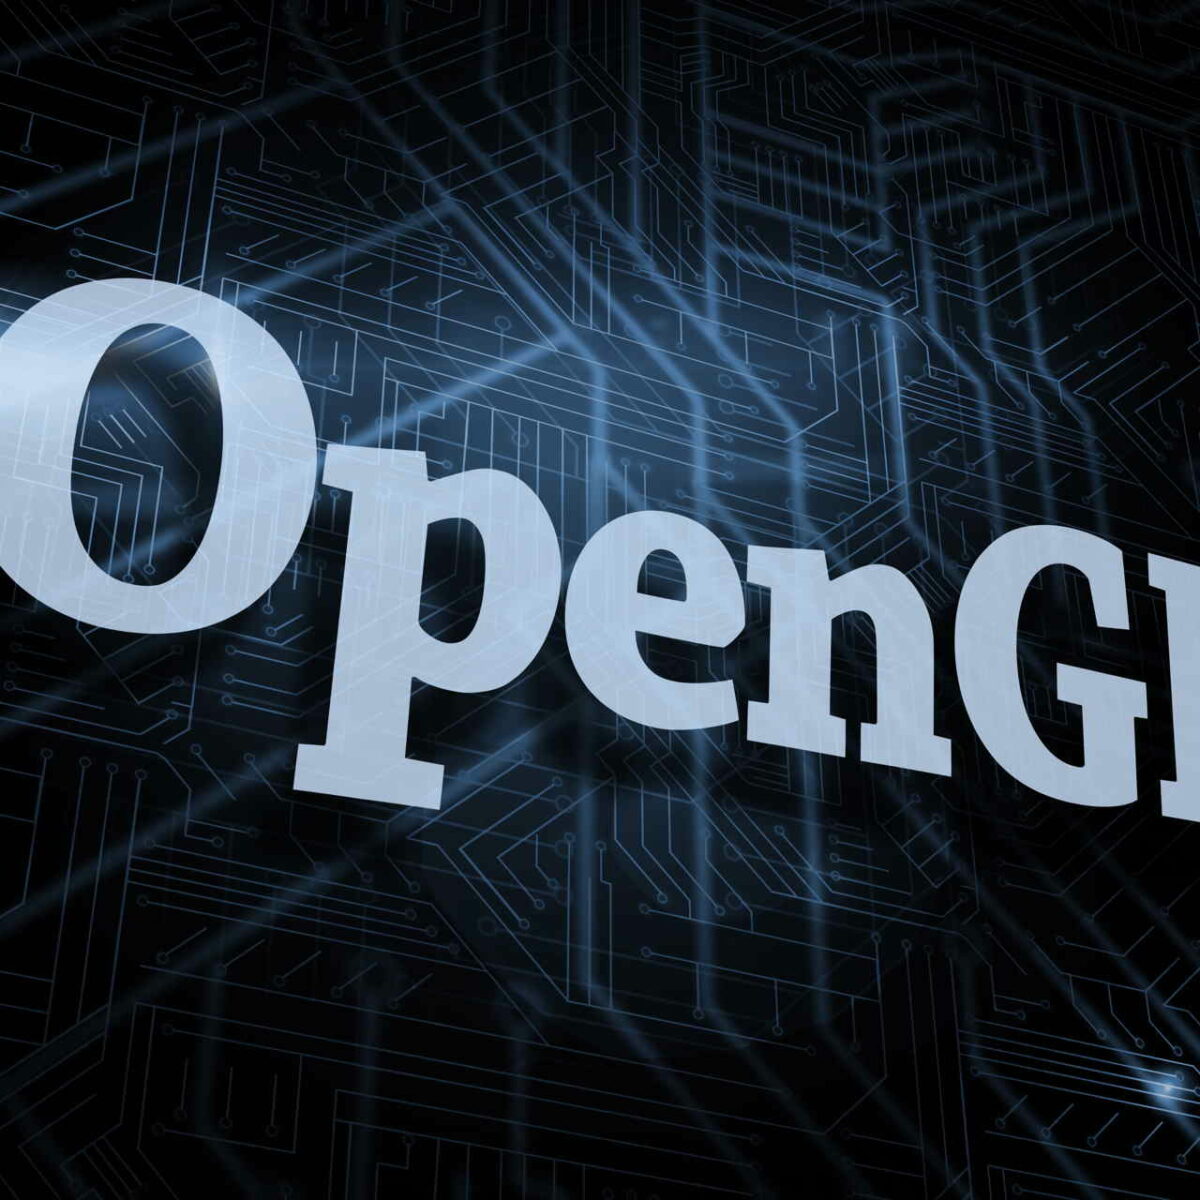 opengl 2.0 windows 7